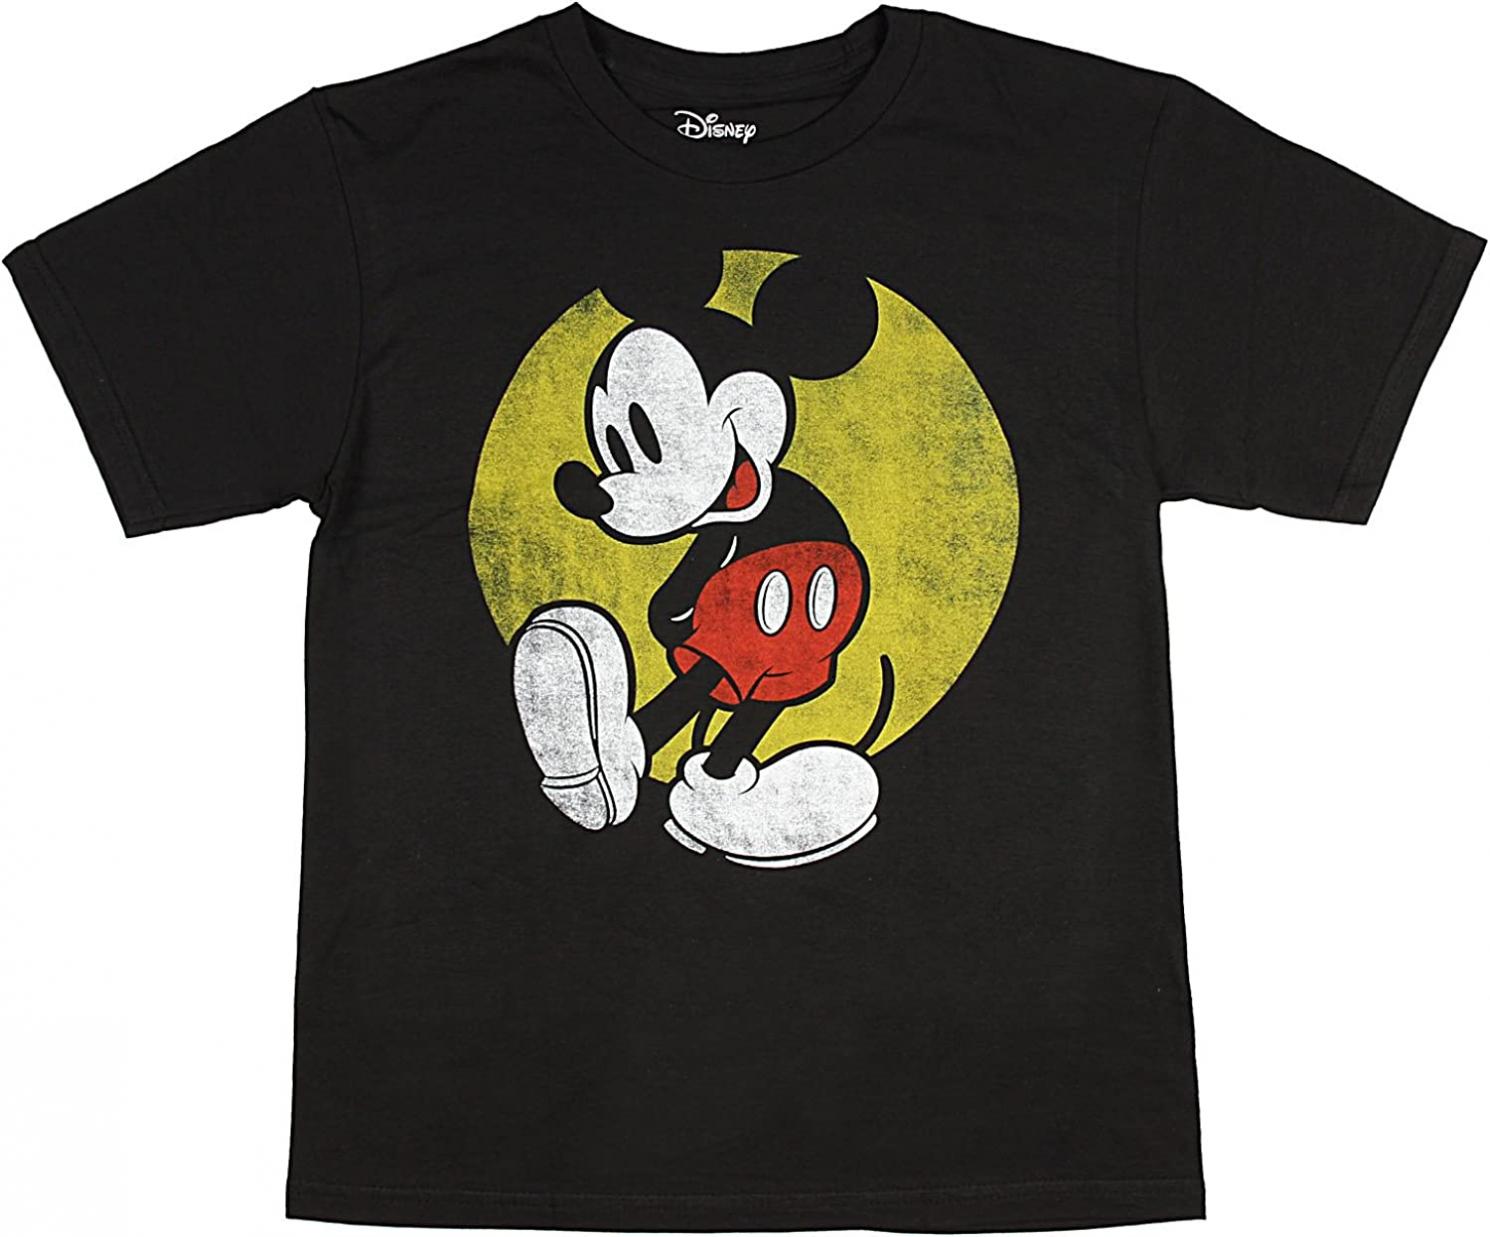 Disney Boy's Classic Mickey Mouse T-Shirt